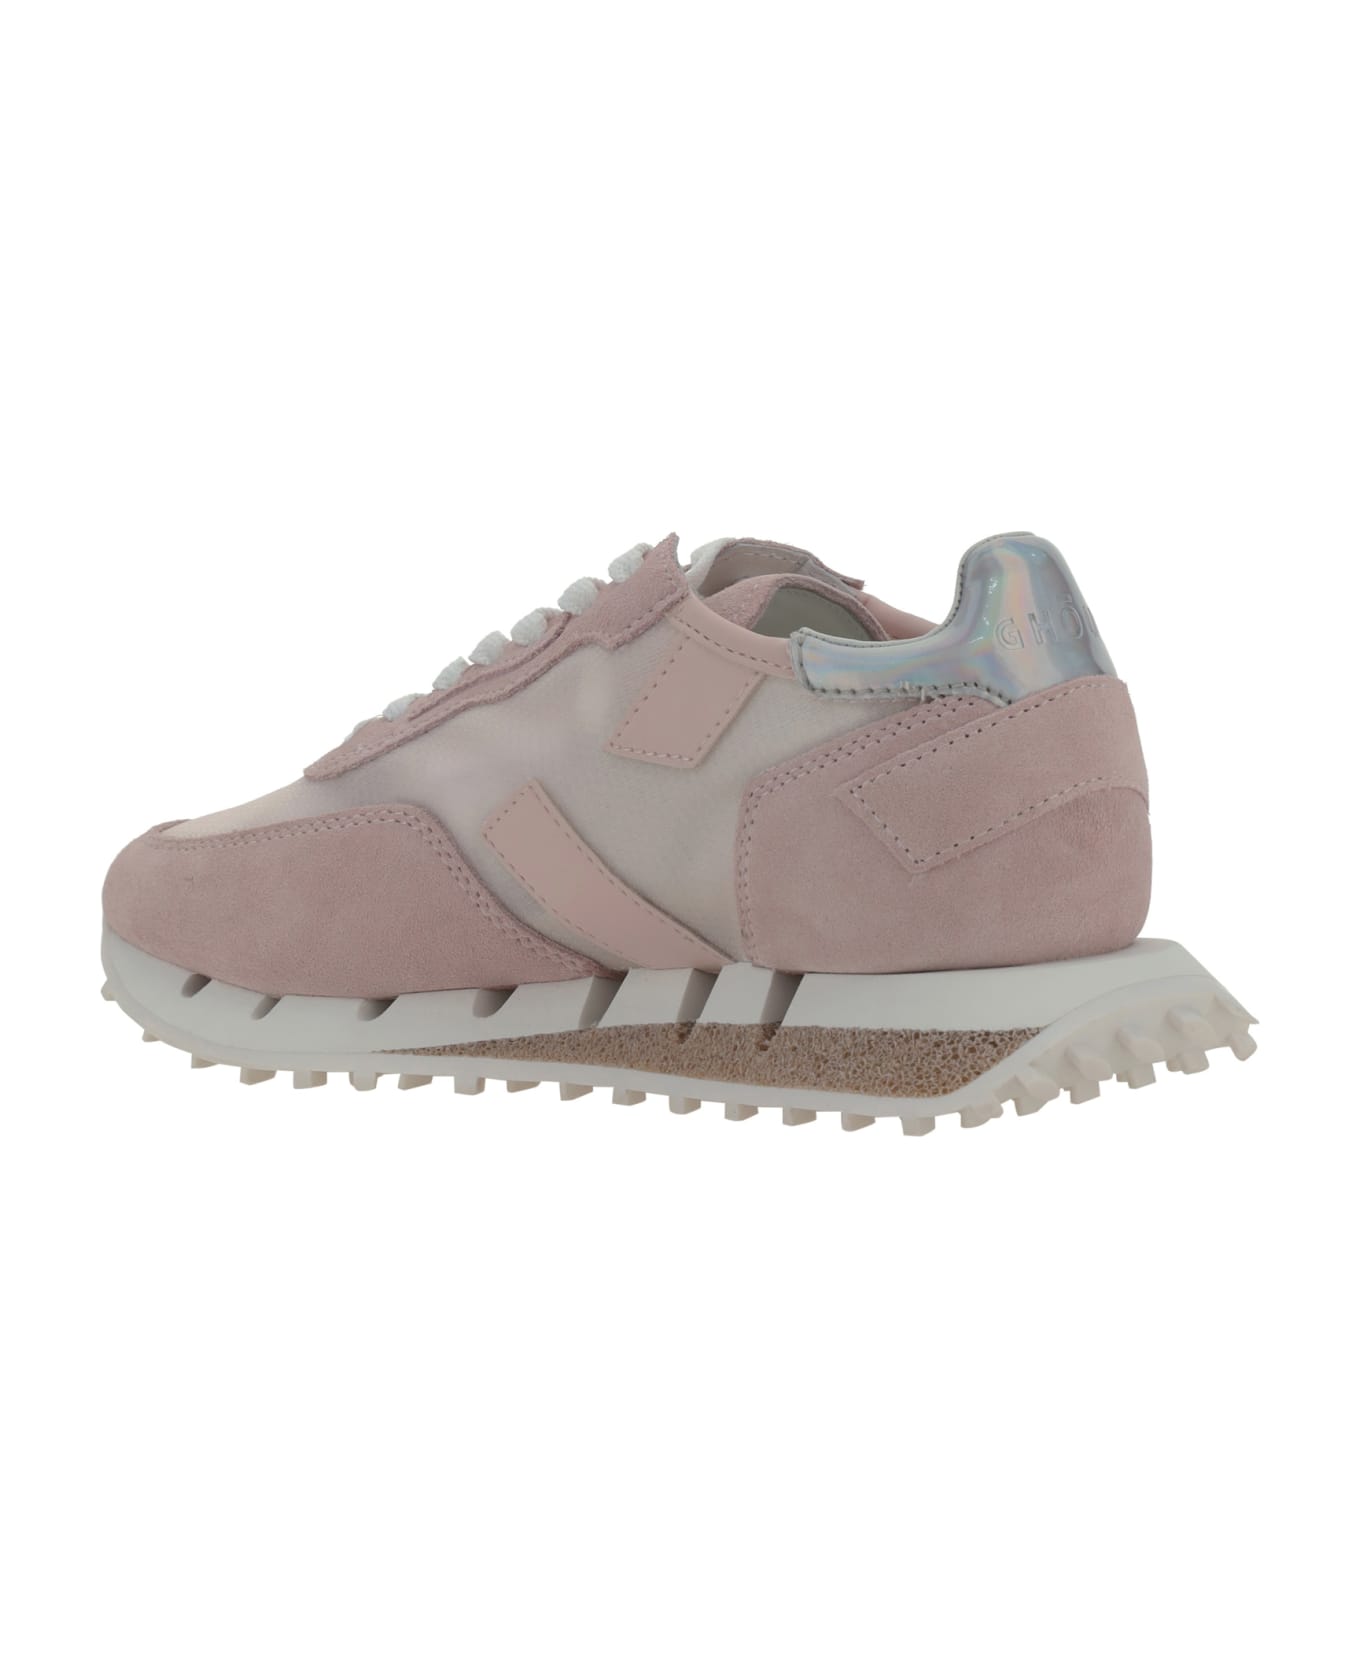 GHOUD Rush Teeth Sneakers - Antiq Pink